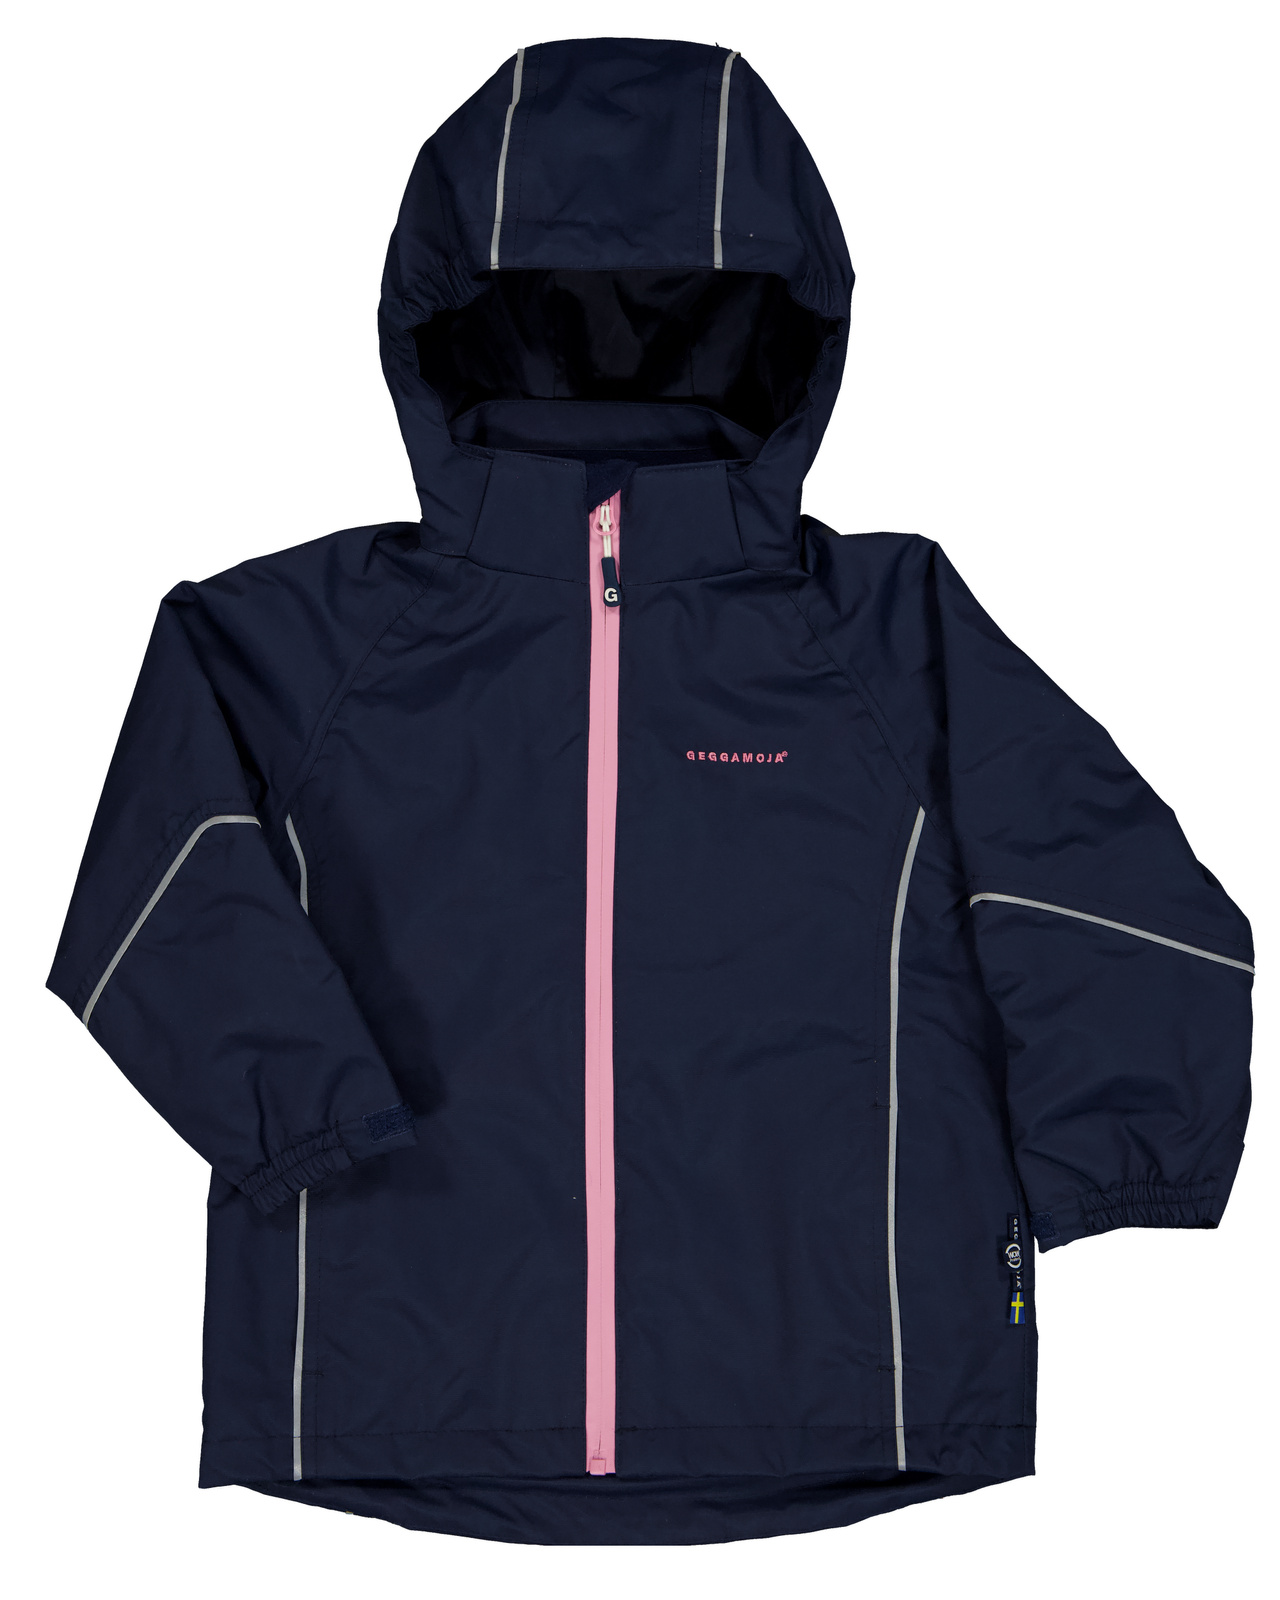 Shell jacket Navy/pink  86/92